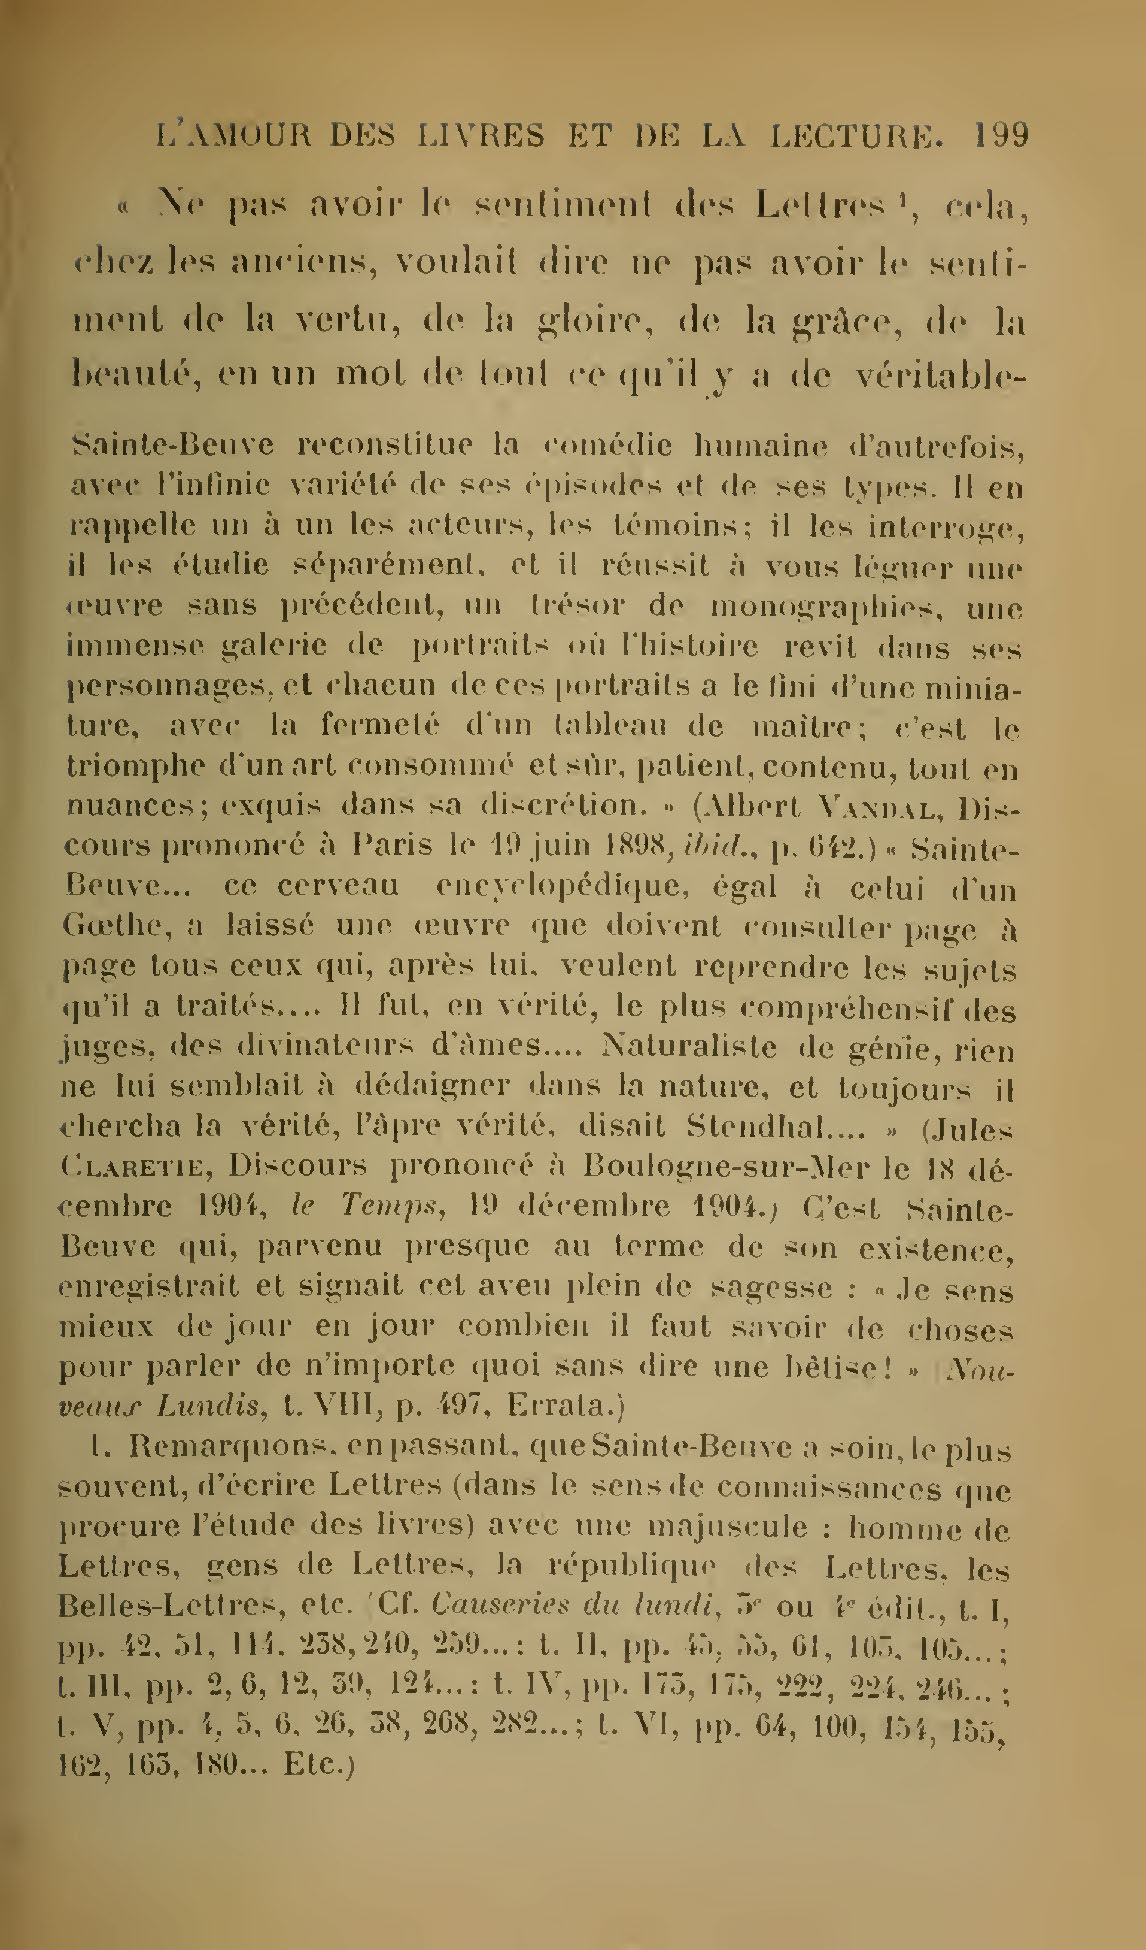 Albert Cim, Le Livre, t. I, p. 199.